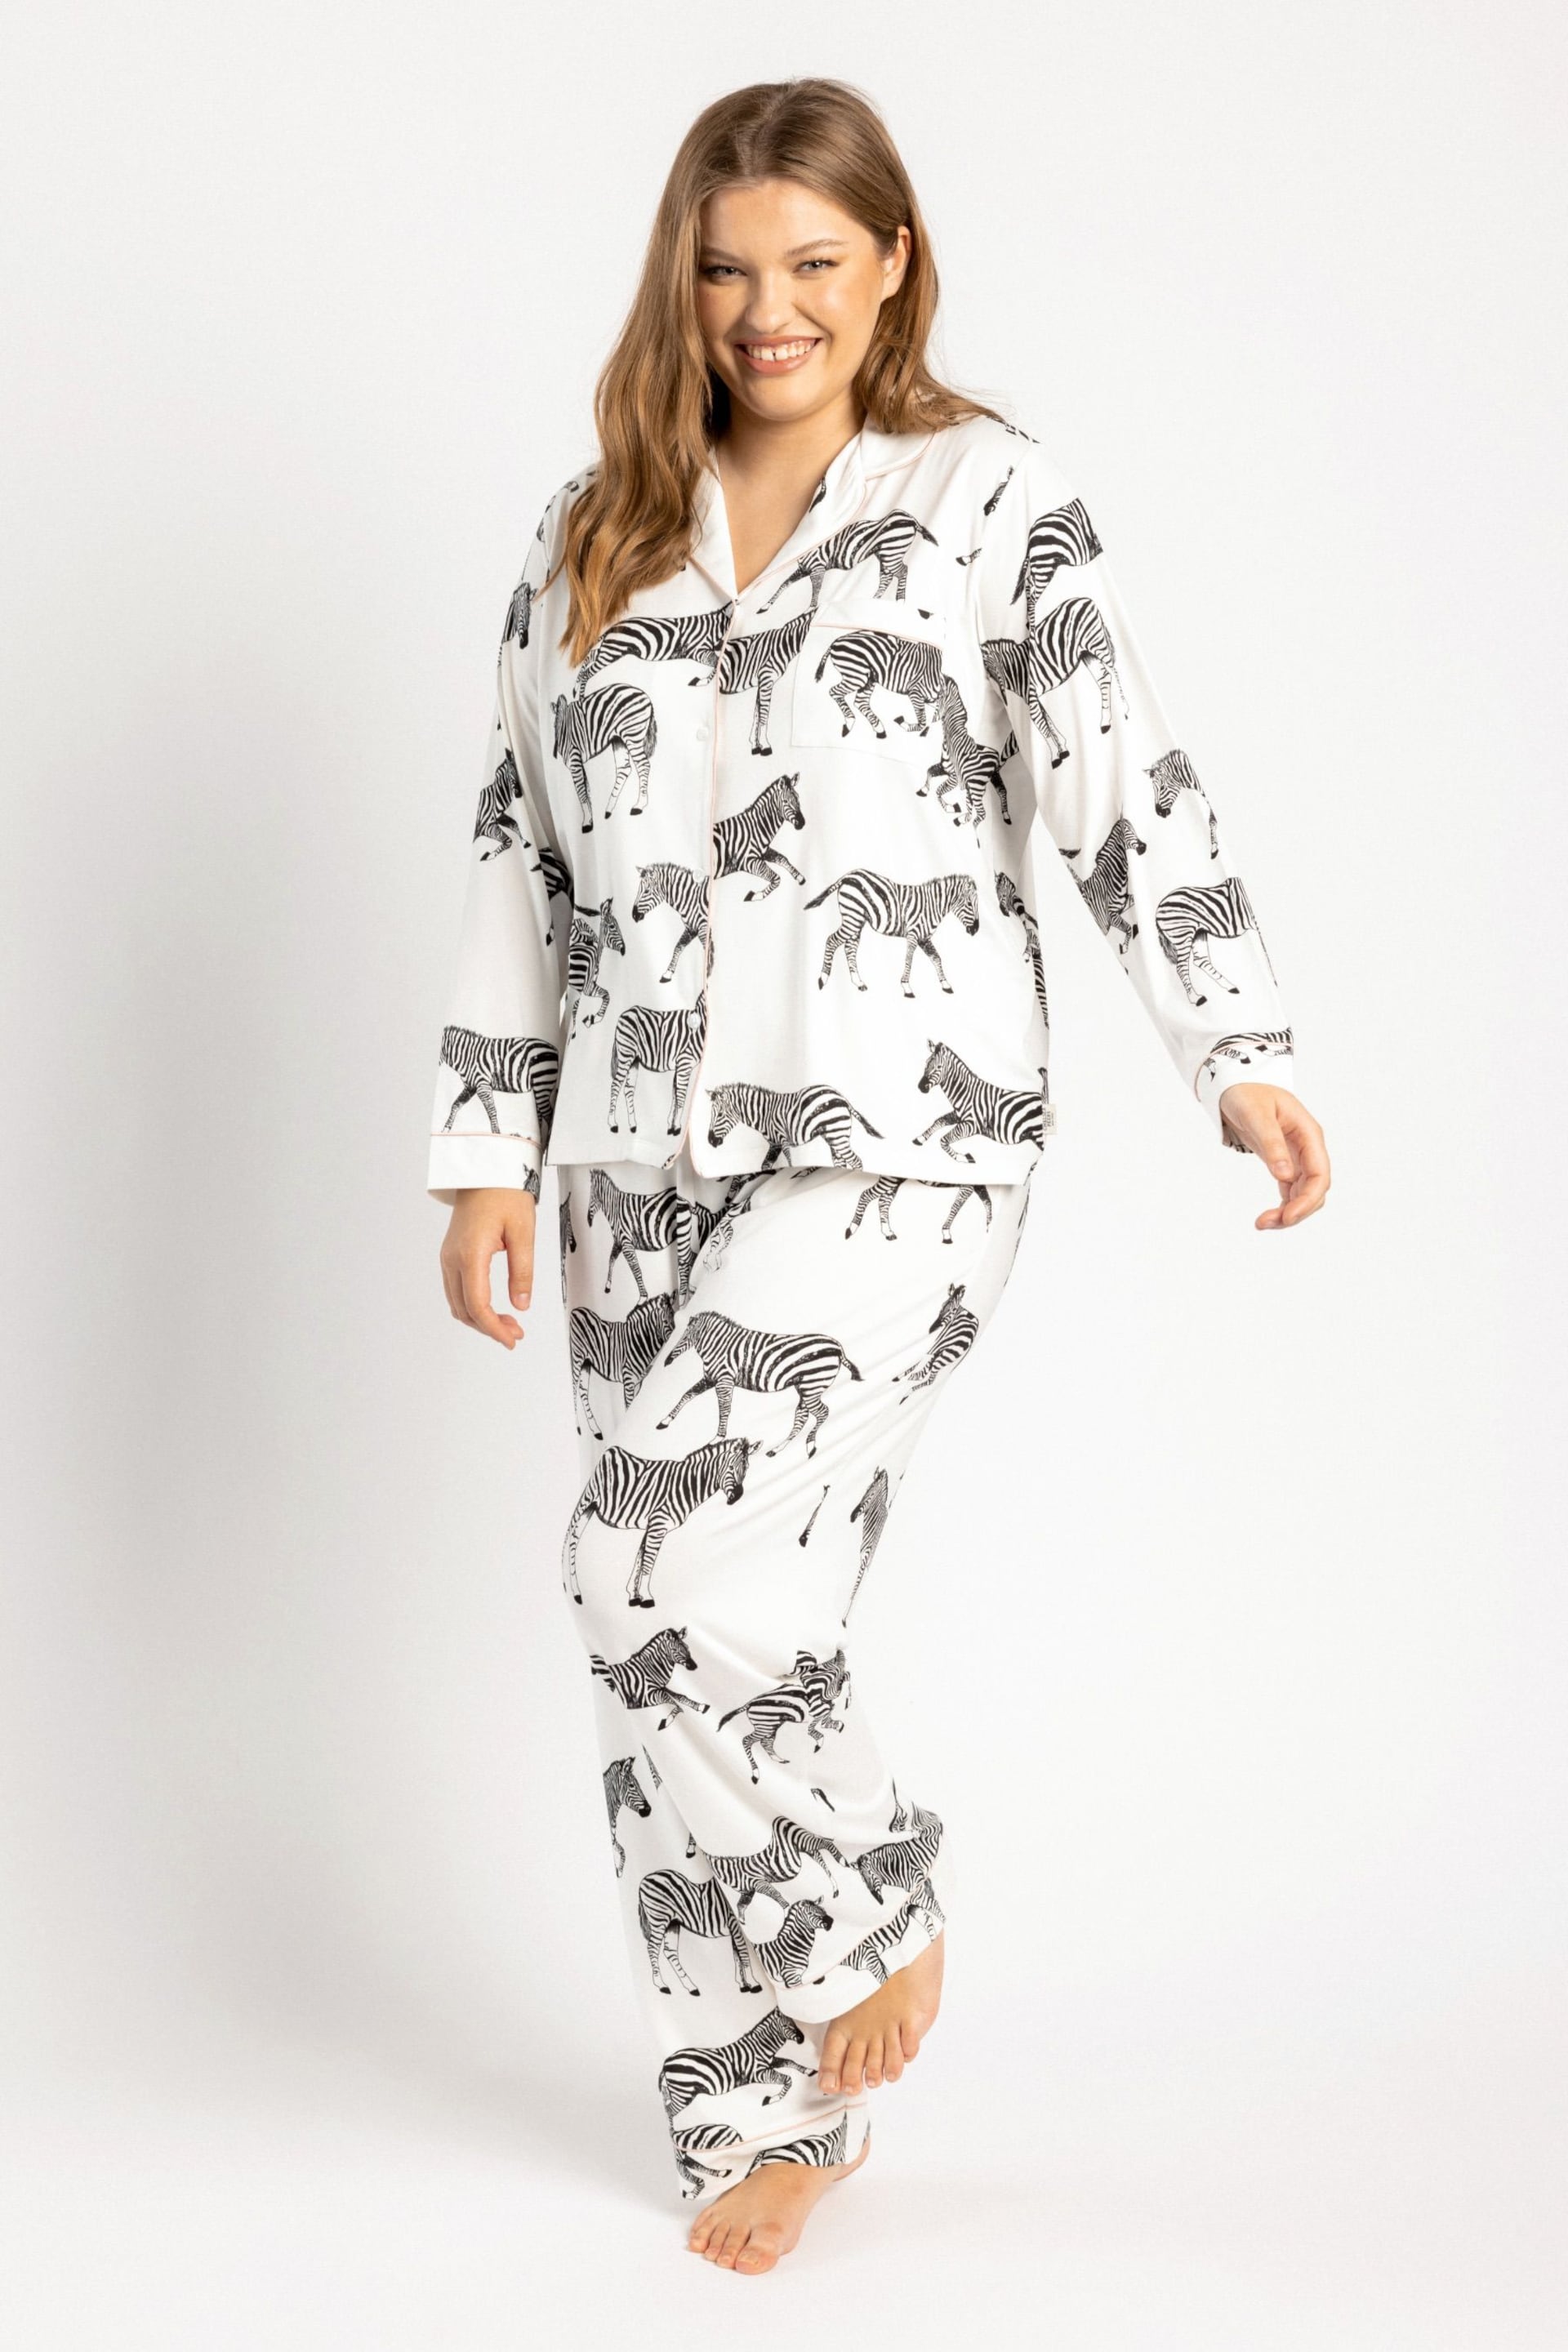 Chelsea Peers Cream Curve Zebra Button Up Pyjamas Set - Image 1 of 6